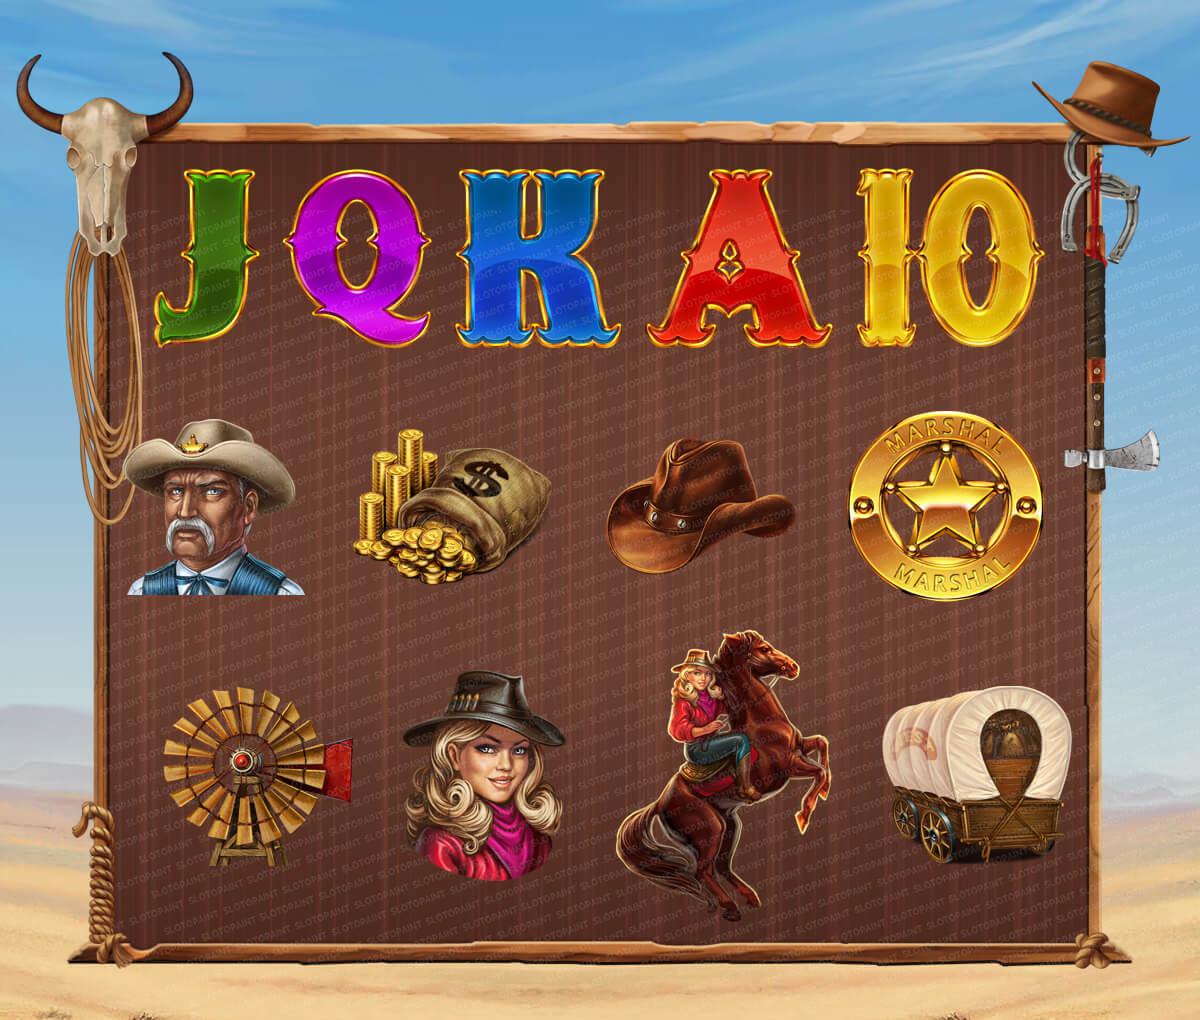 Cowboy symbols. characters at slot machine "Wild West"